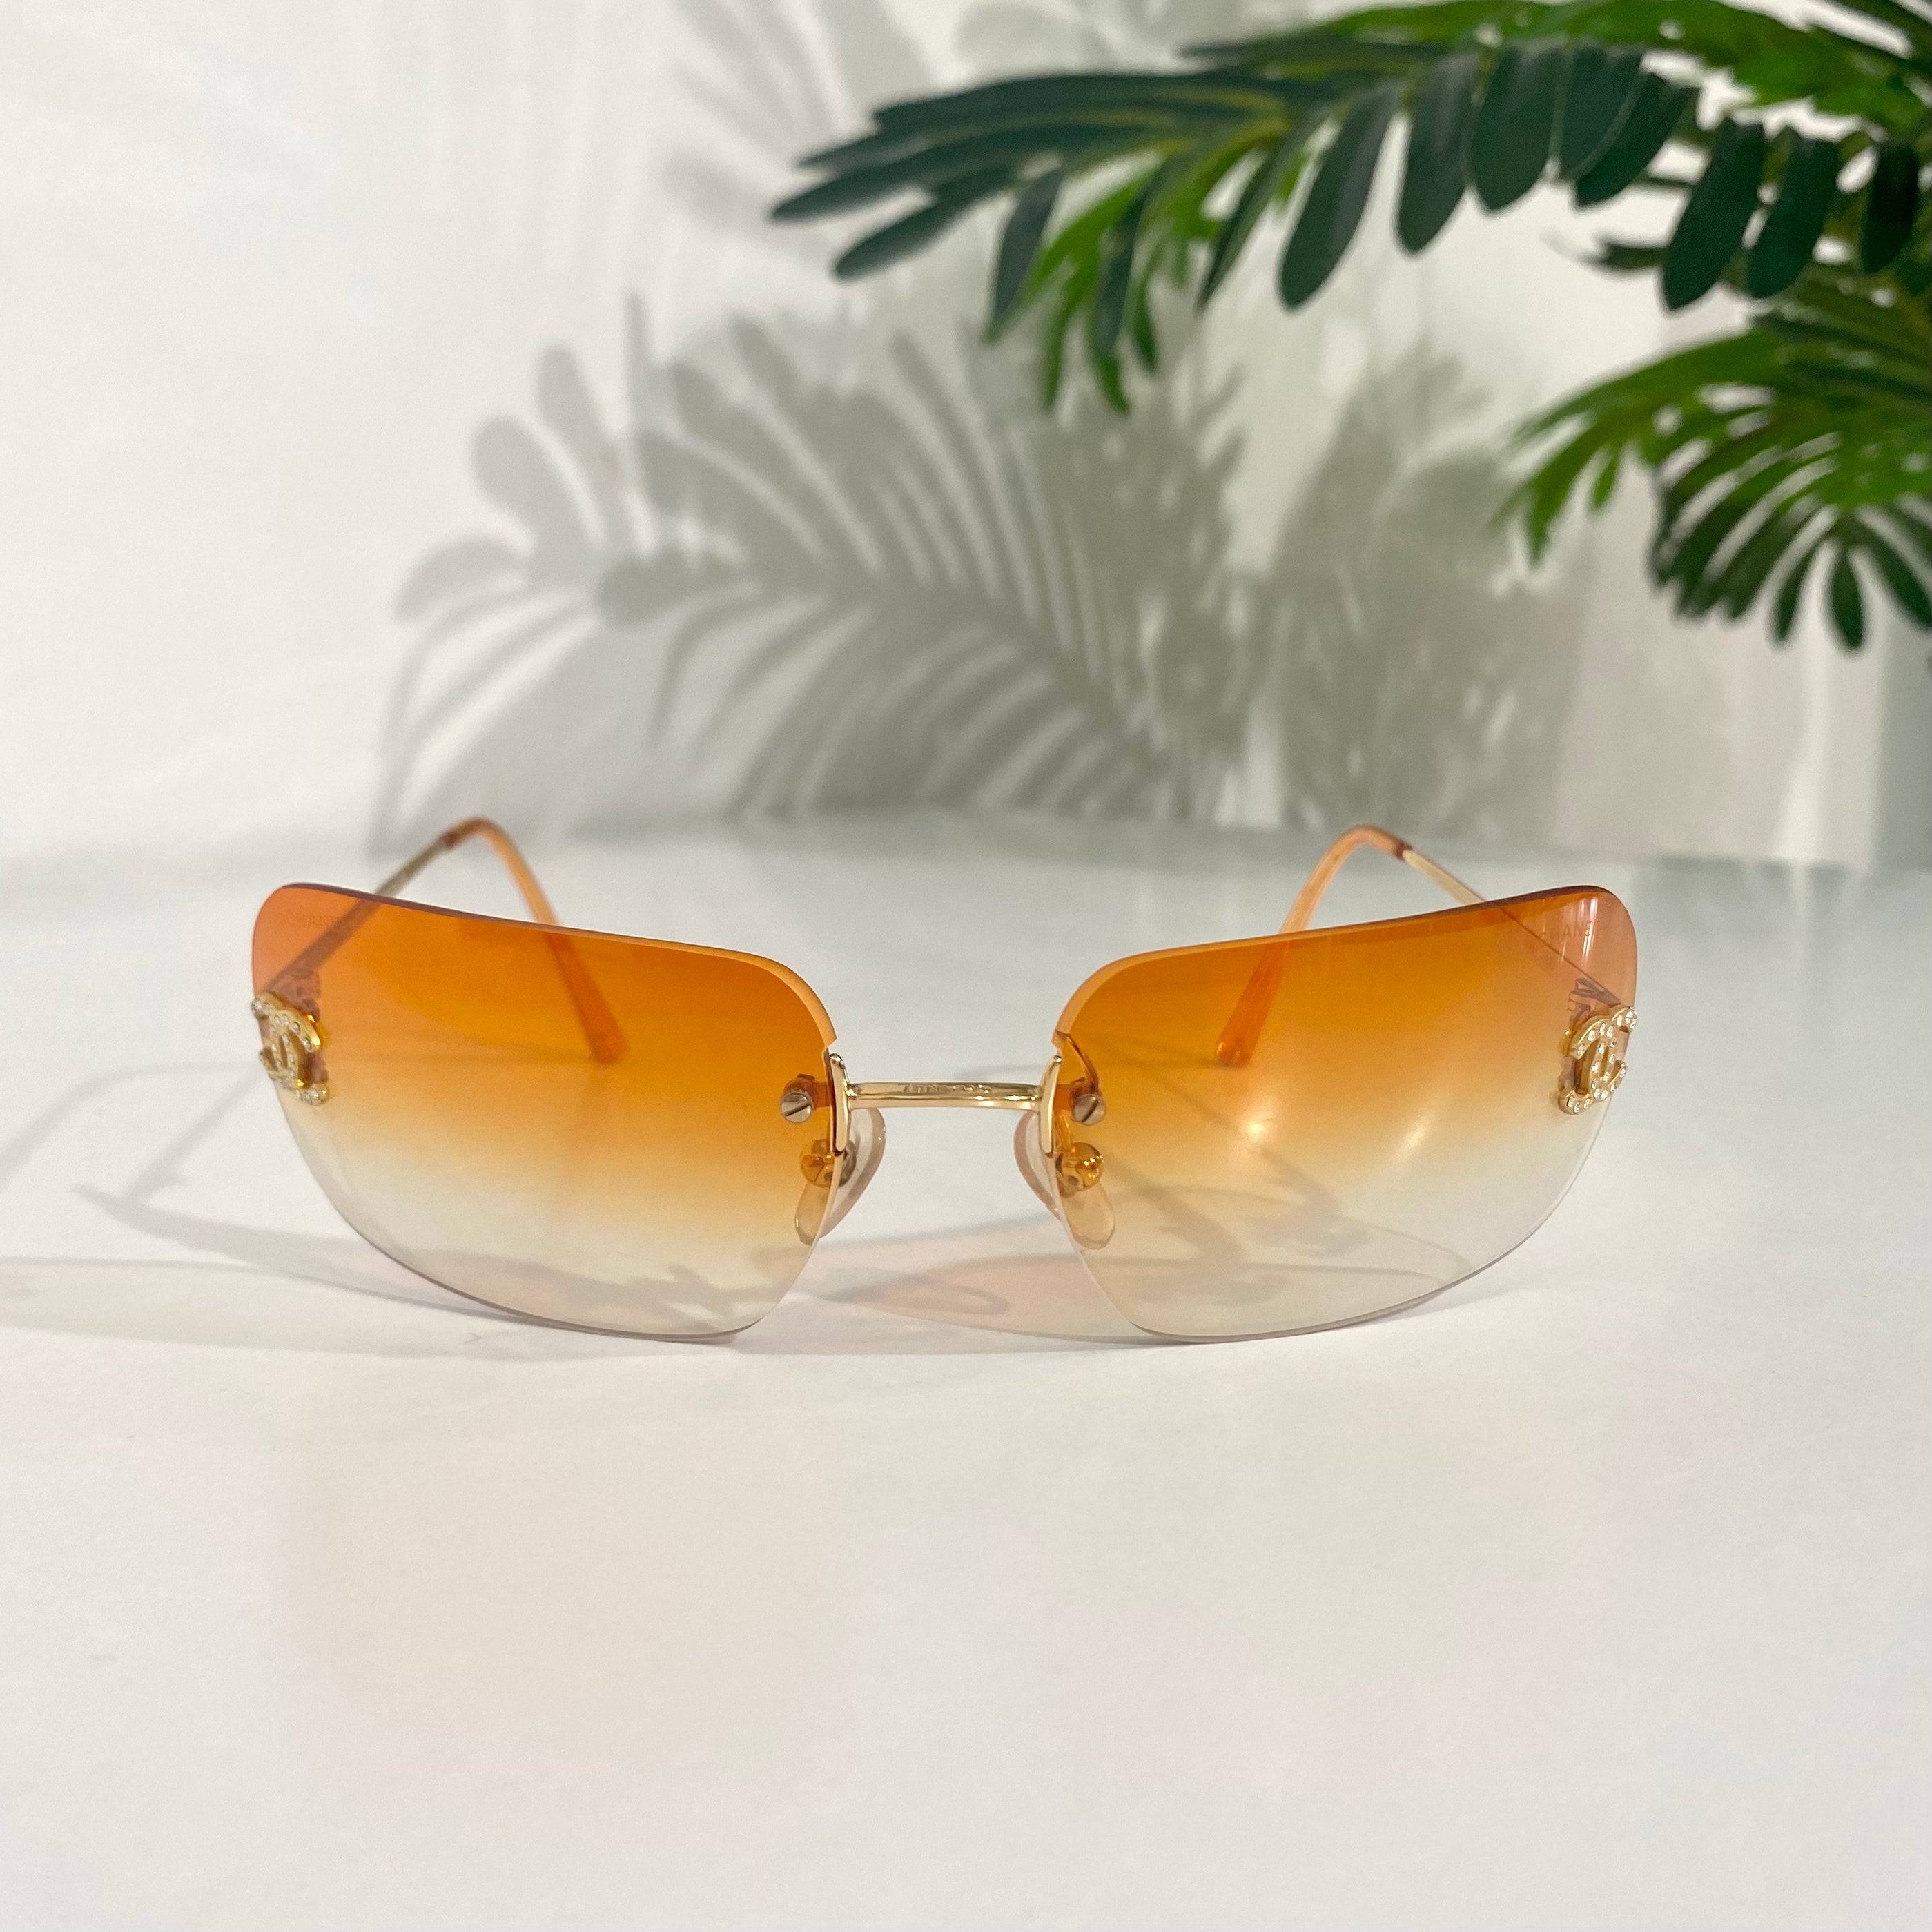 Chanel Cat Eye Sunglasses in Metallic